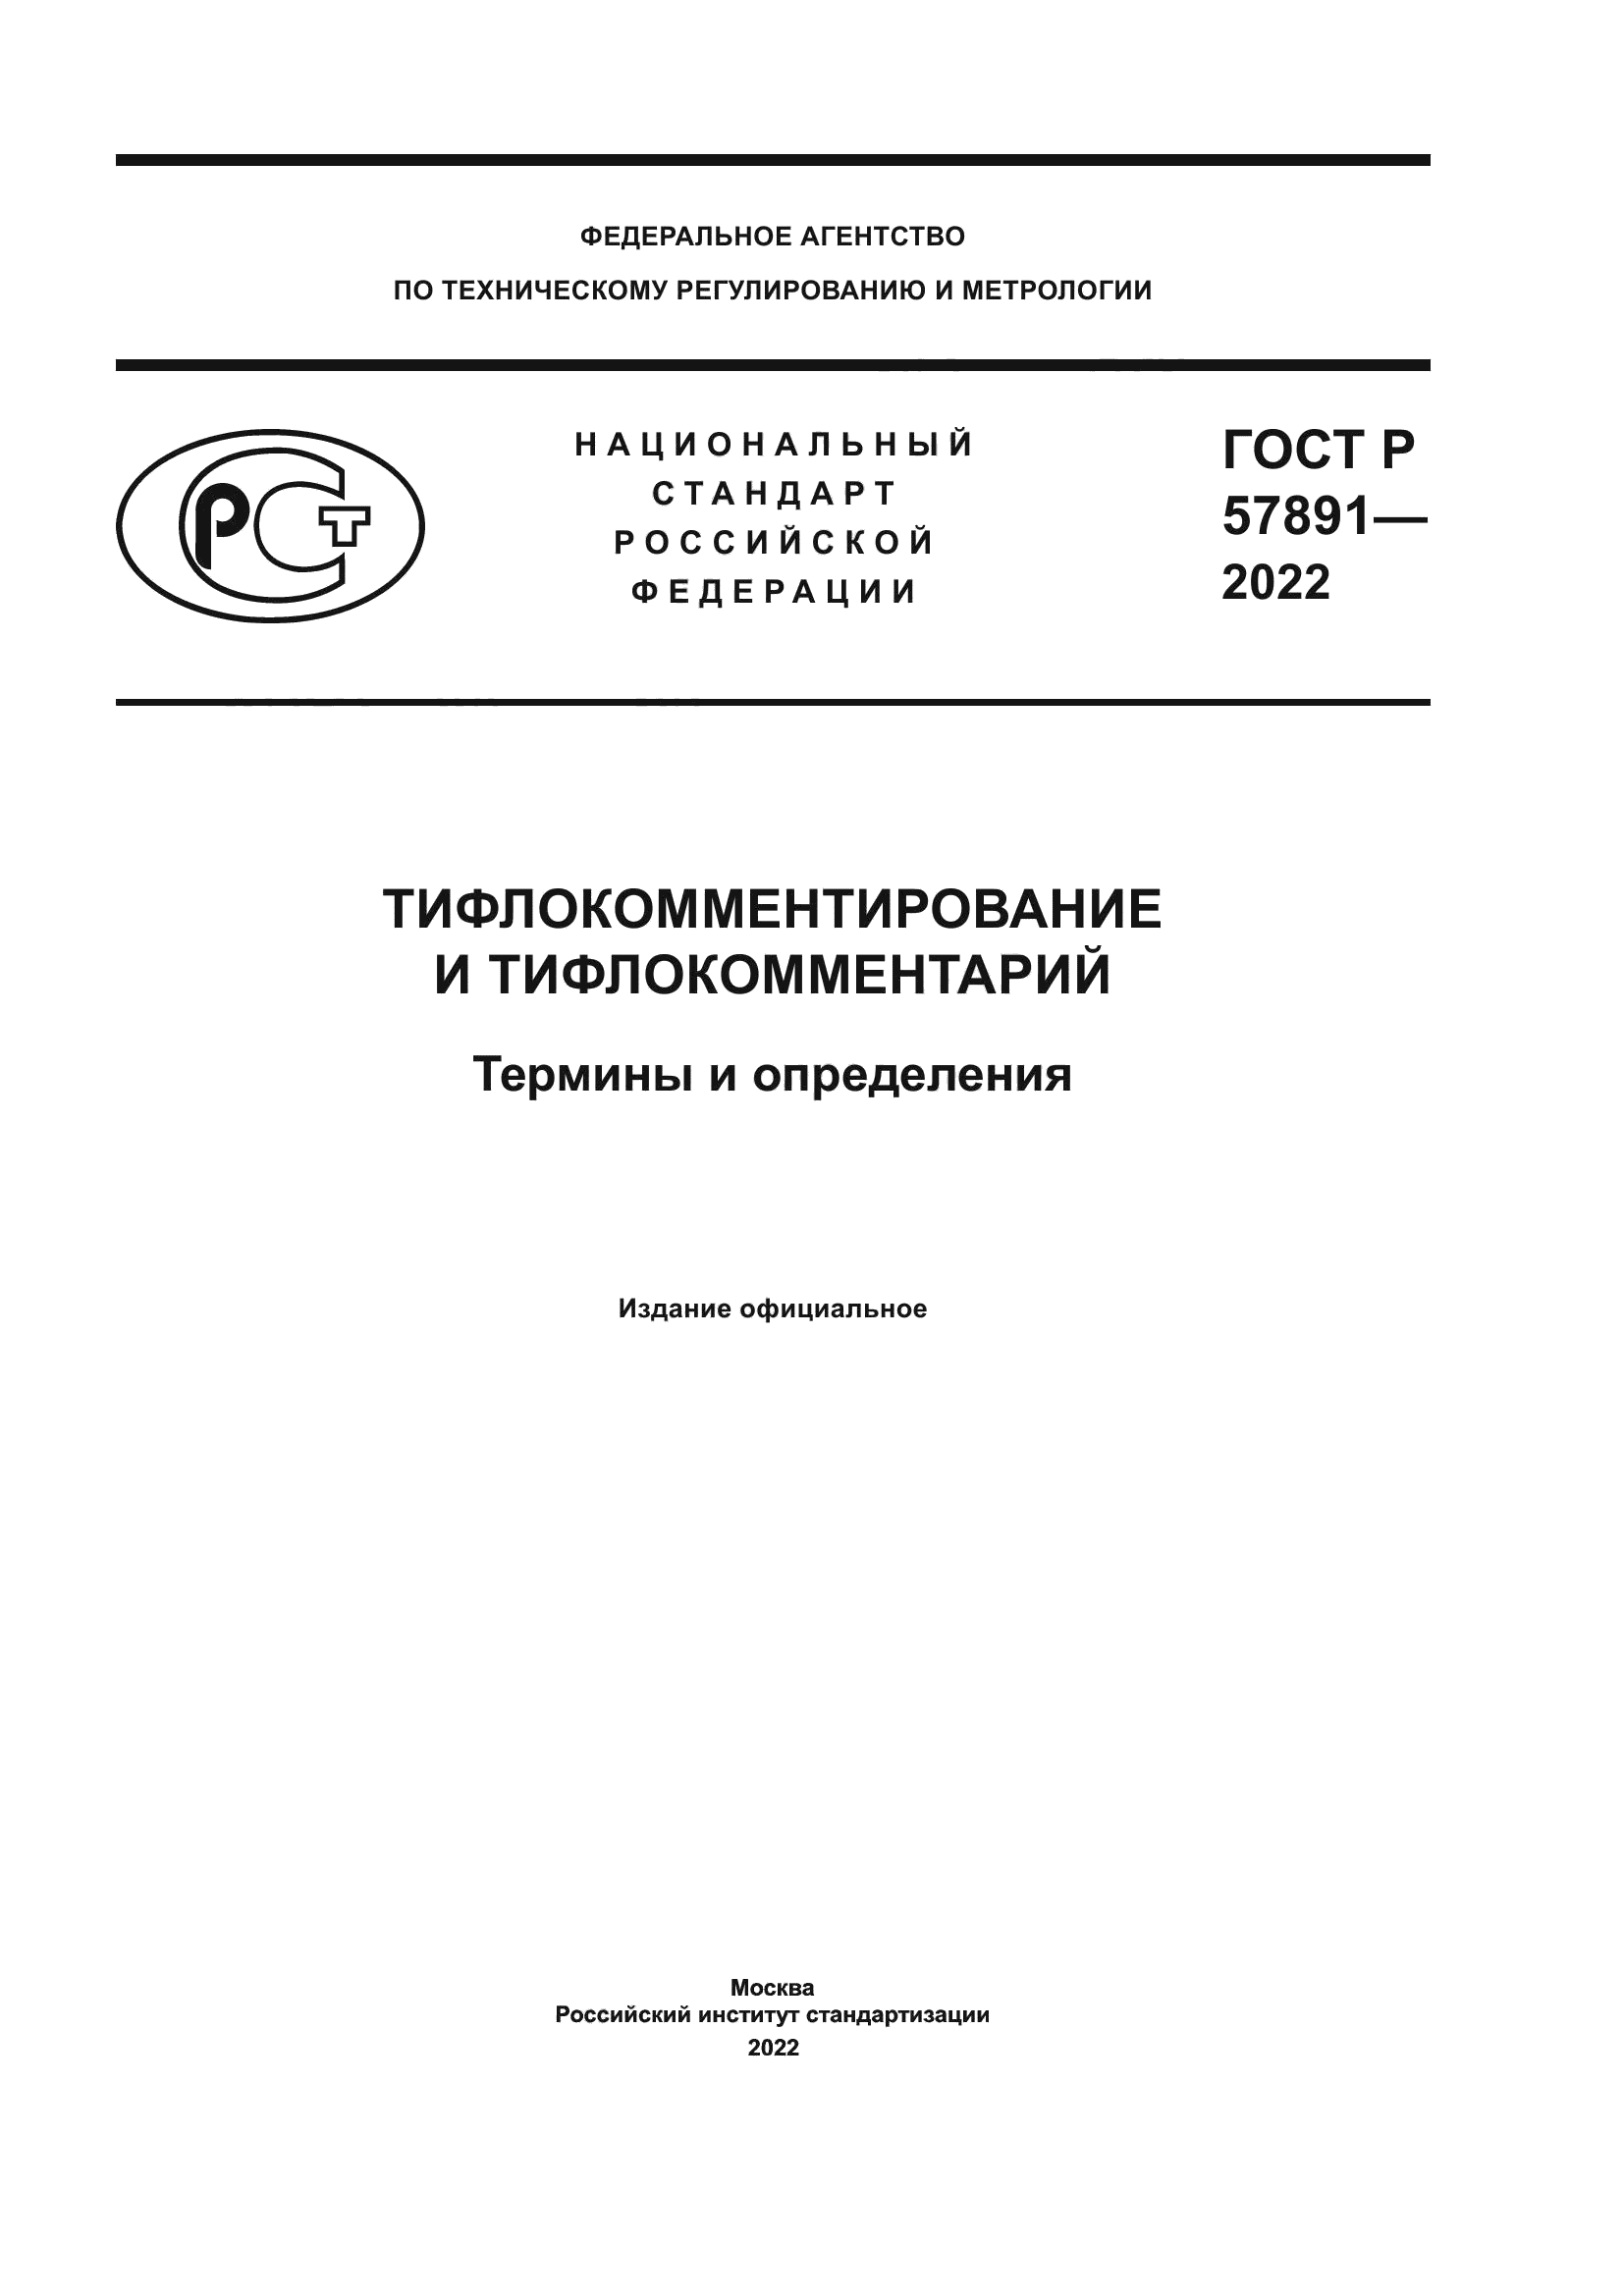 ГОСТ Р 57891-2022